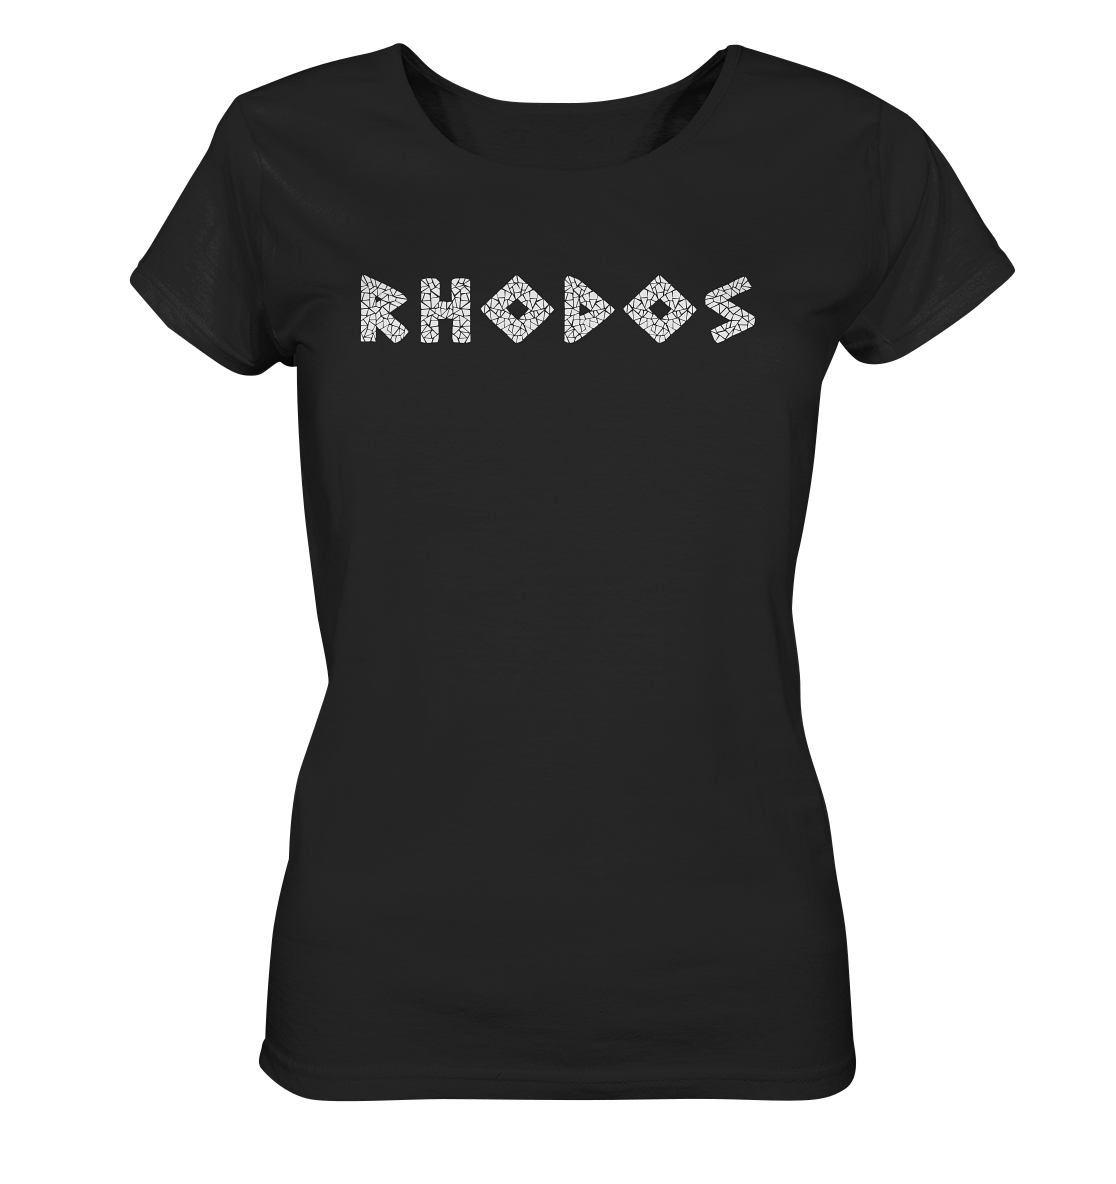 Rhodes Mosaic - Ladies Organic Shirt